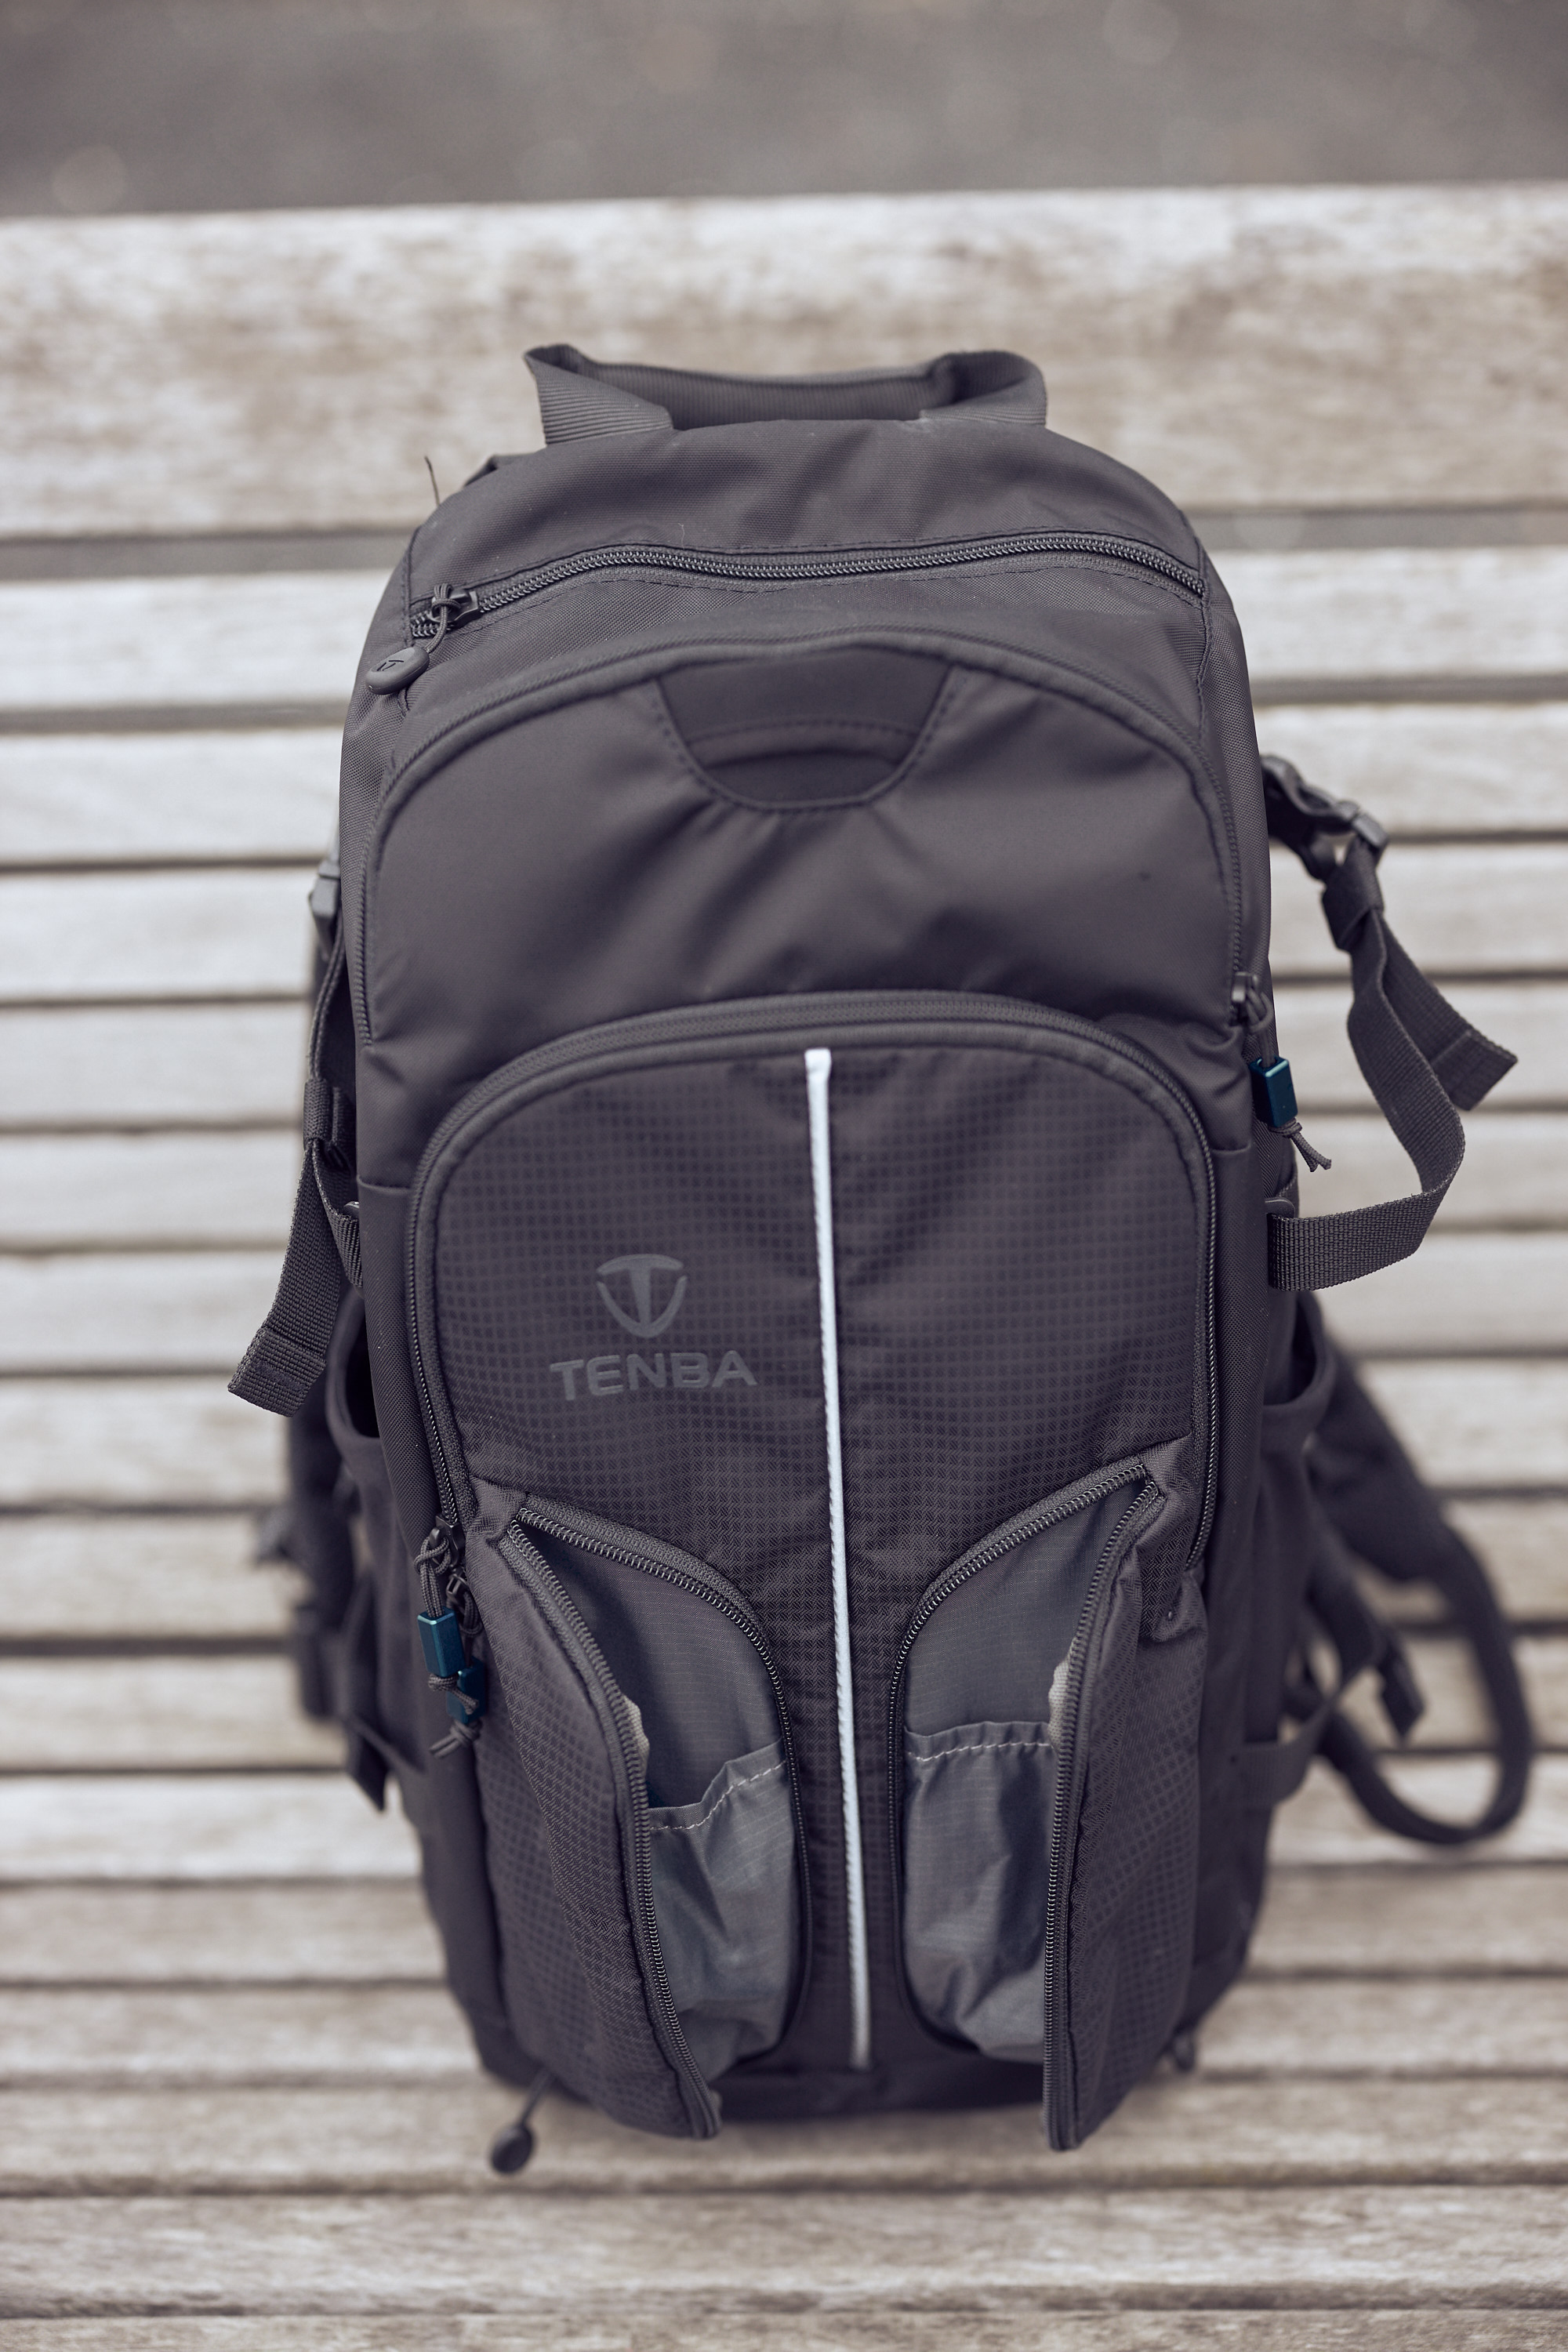 Review: Tenba Shootout 16L DSLR In-Between Backpack Bag) (The